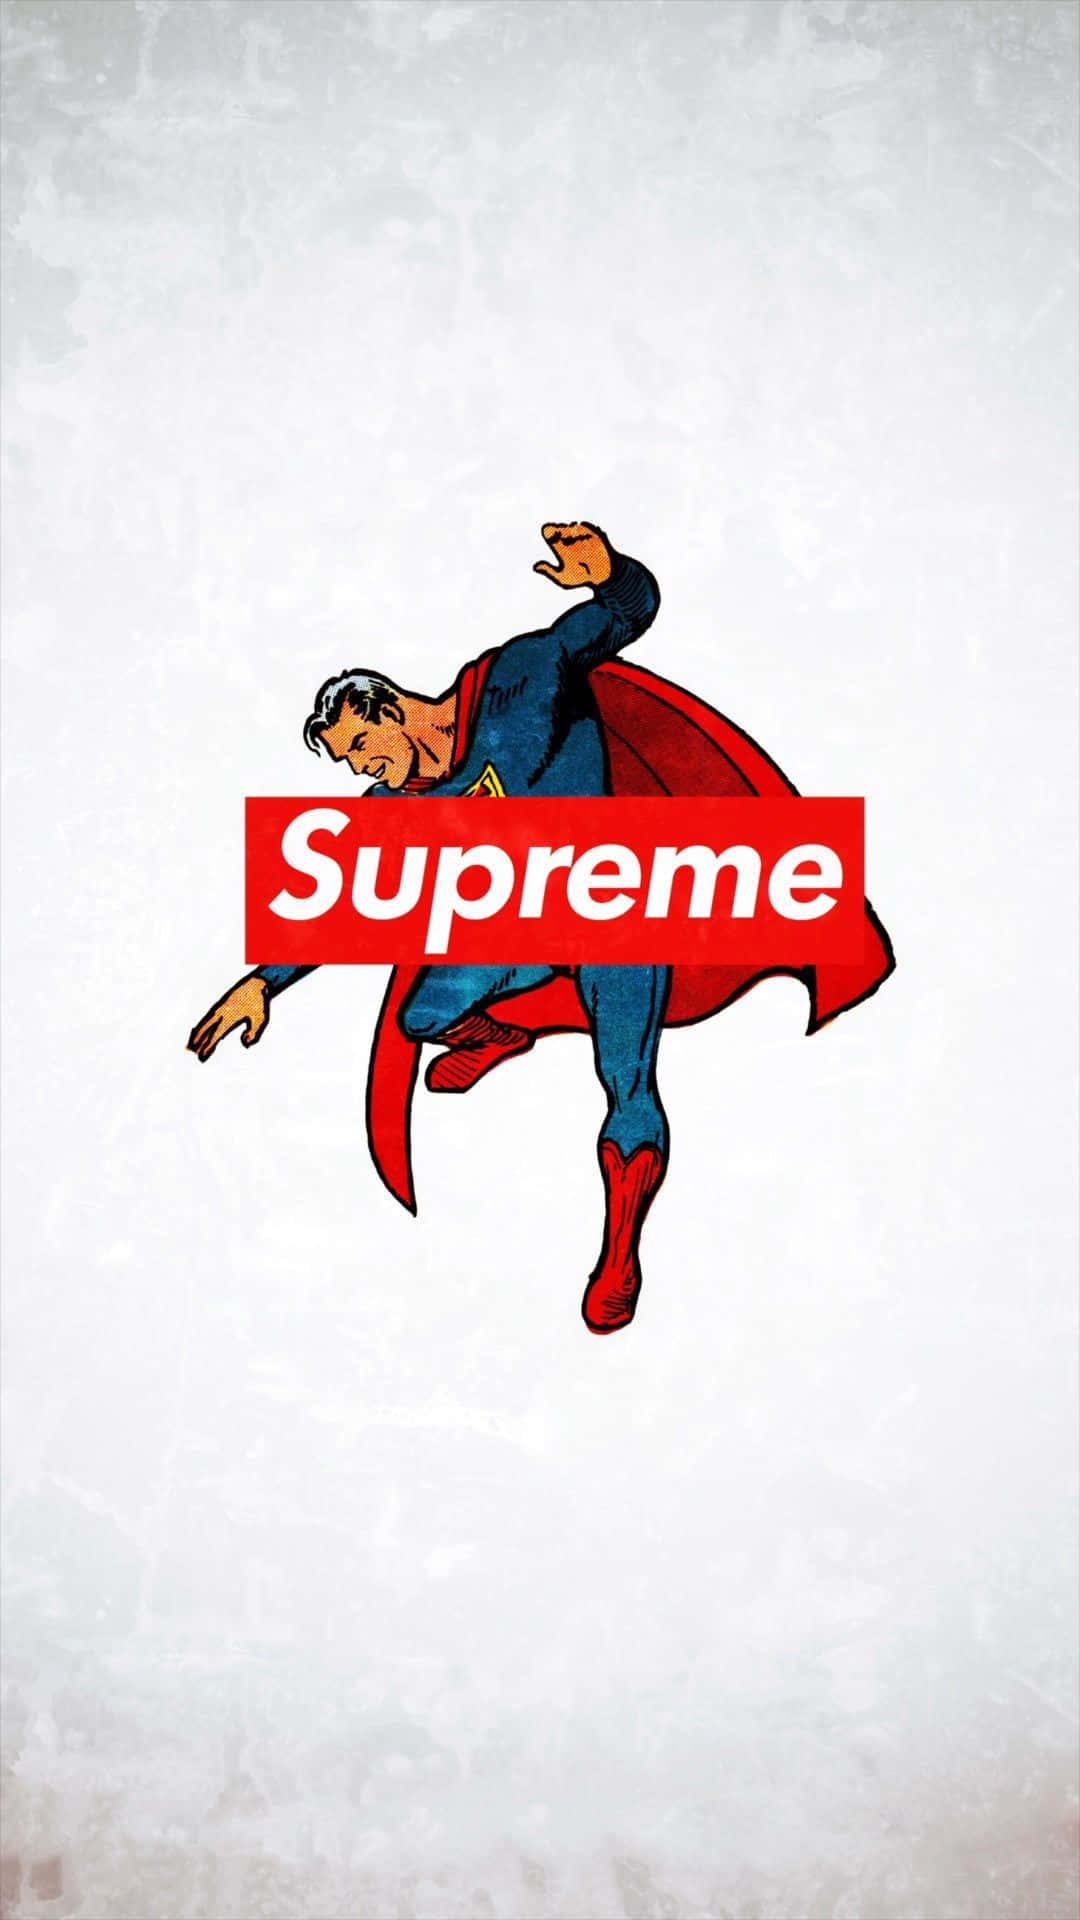 Free Cartoon Supreme Clothing Wallpaper Downloads, [100+] Cartoon Supreme  Clothing Wallpapers for FREE | Wallpapers.com